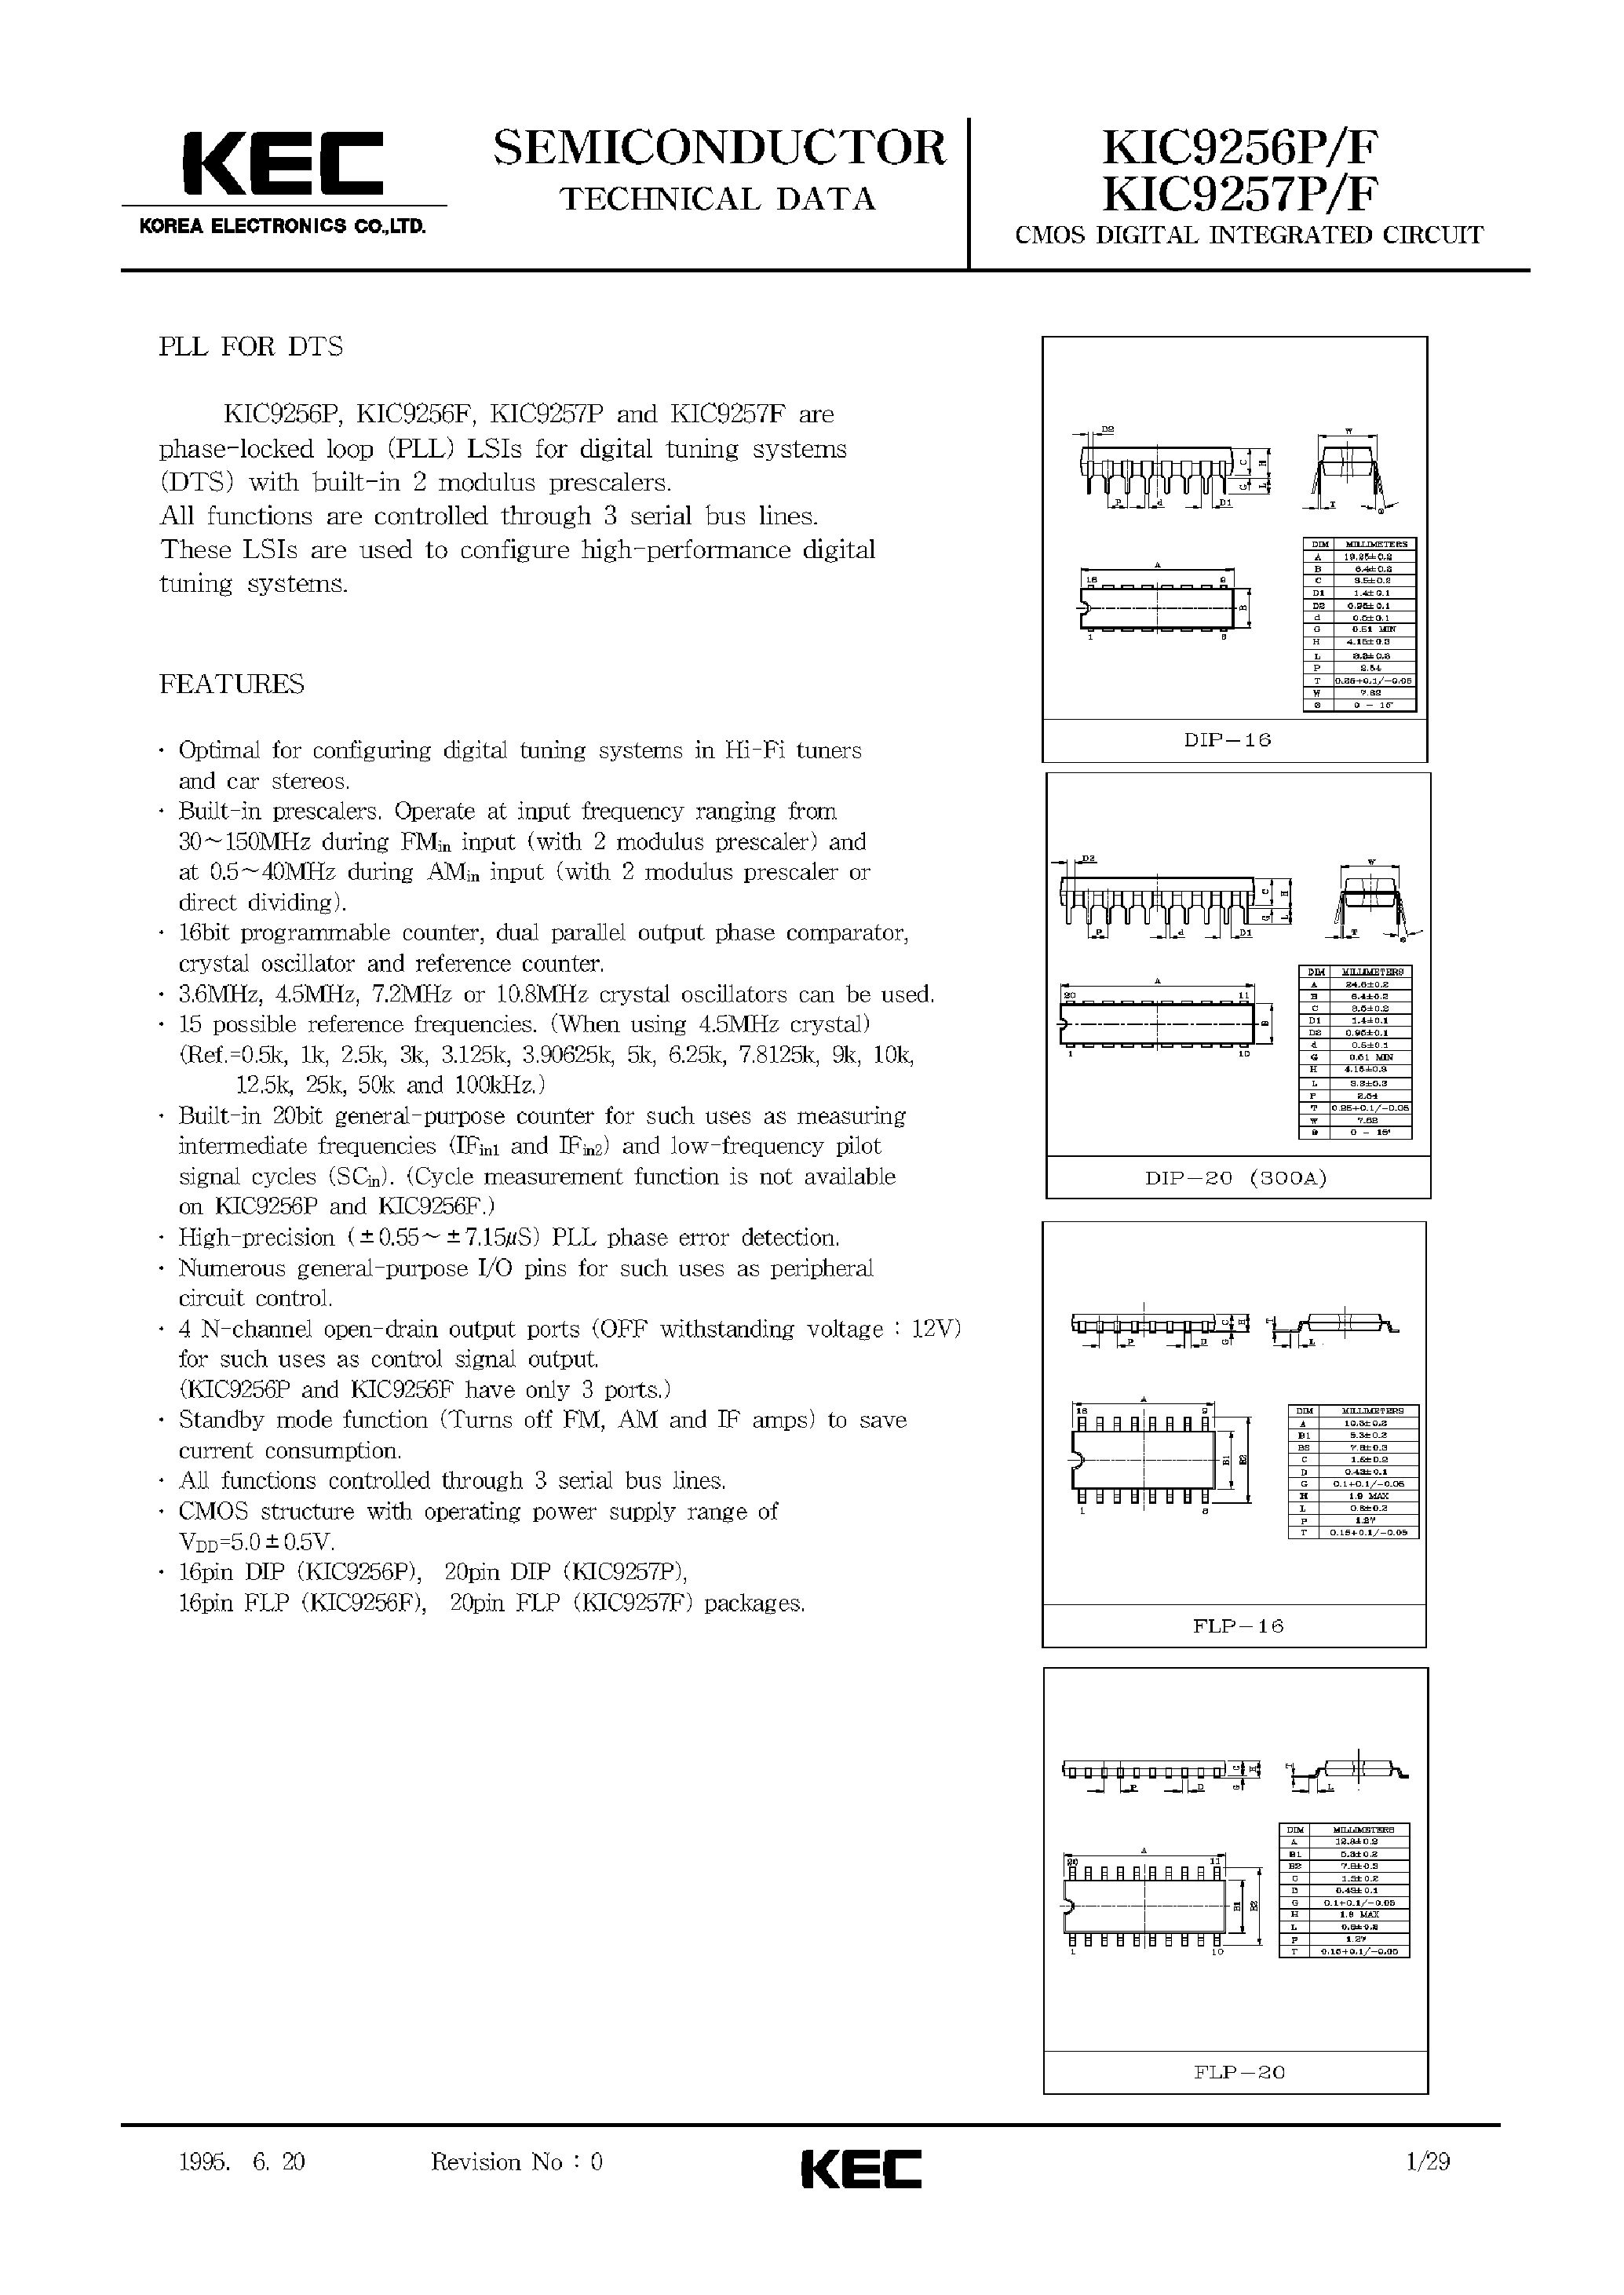 Datasheet KIC9257P/F - SEMICONDUCTOR TECHNICAL DATA page 1